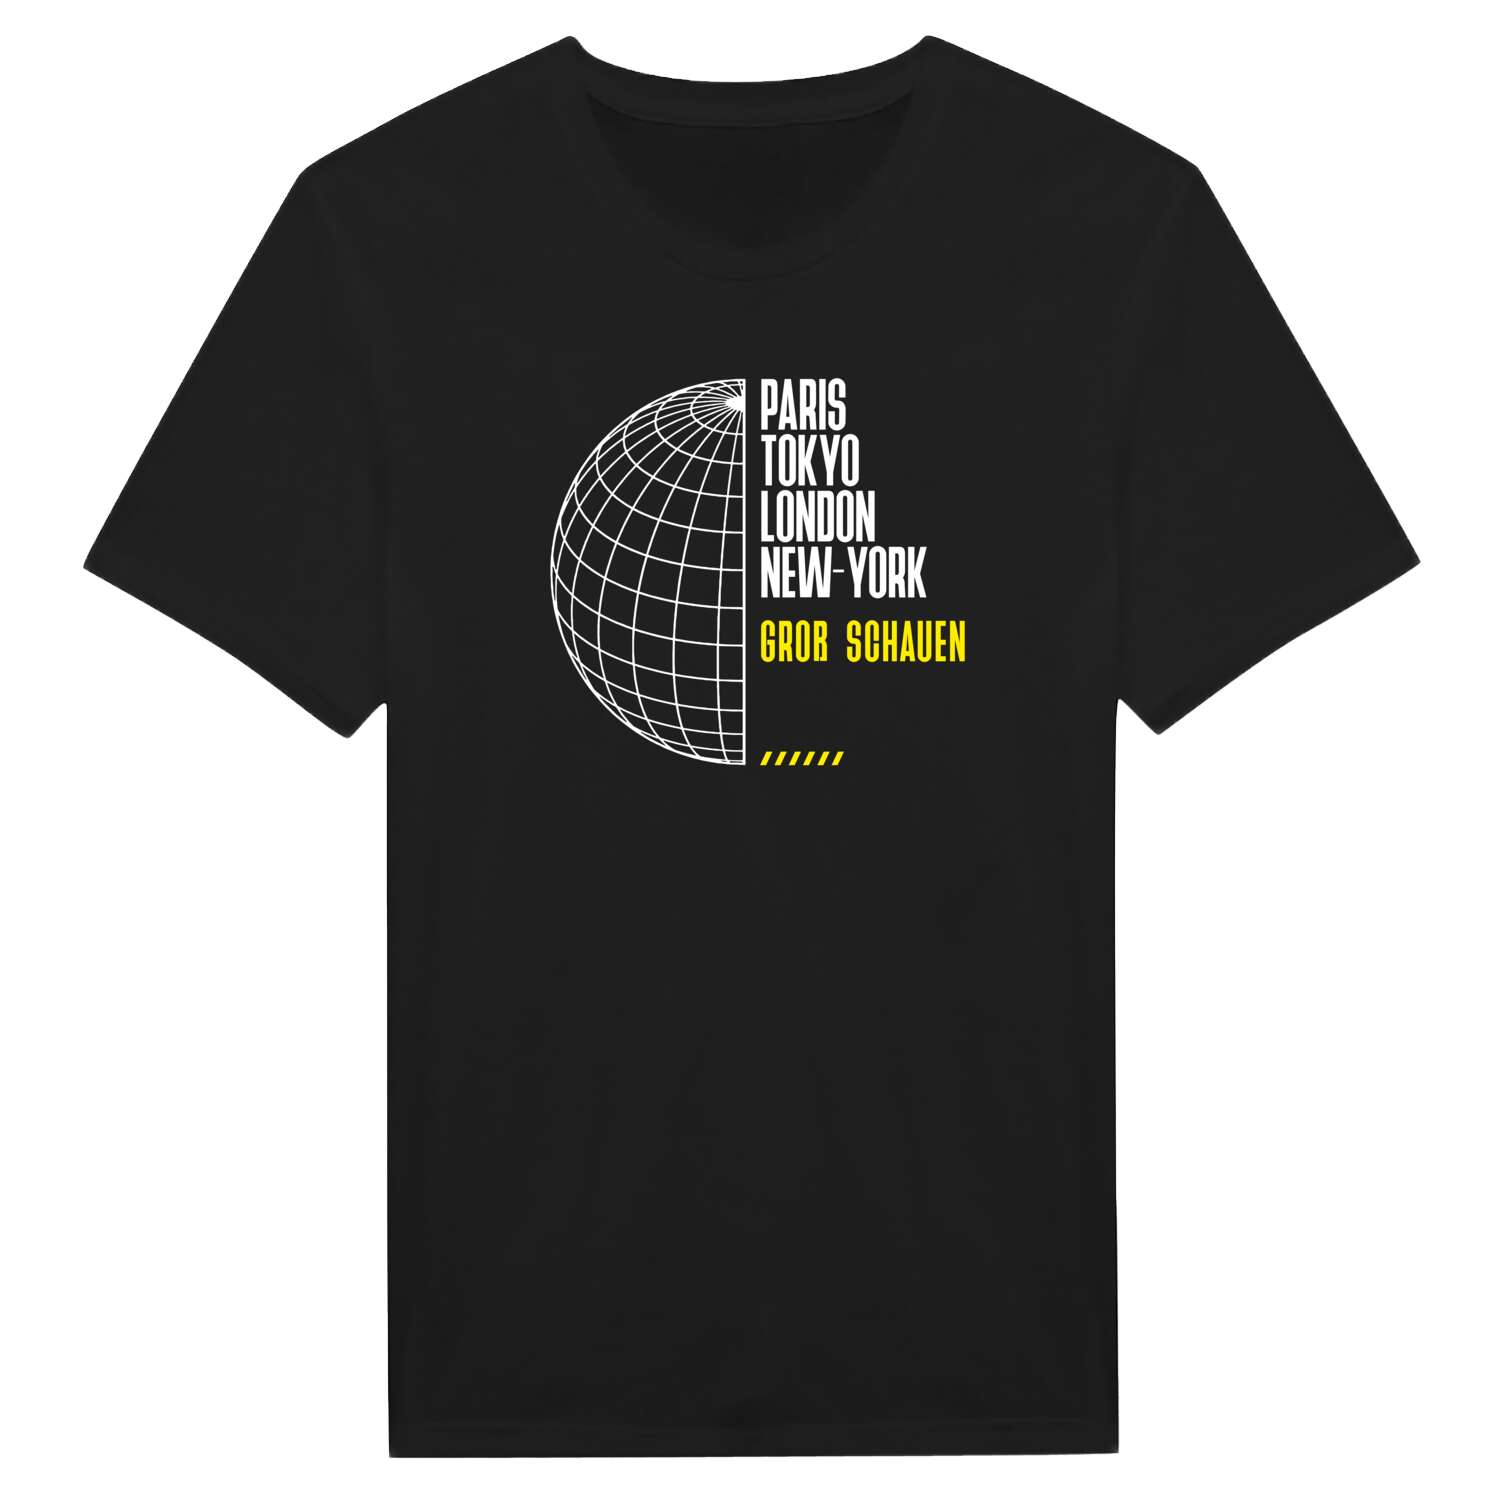 Groß Schauen T-Shirt »Paris Tokyo London«